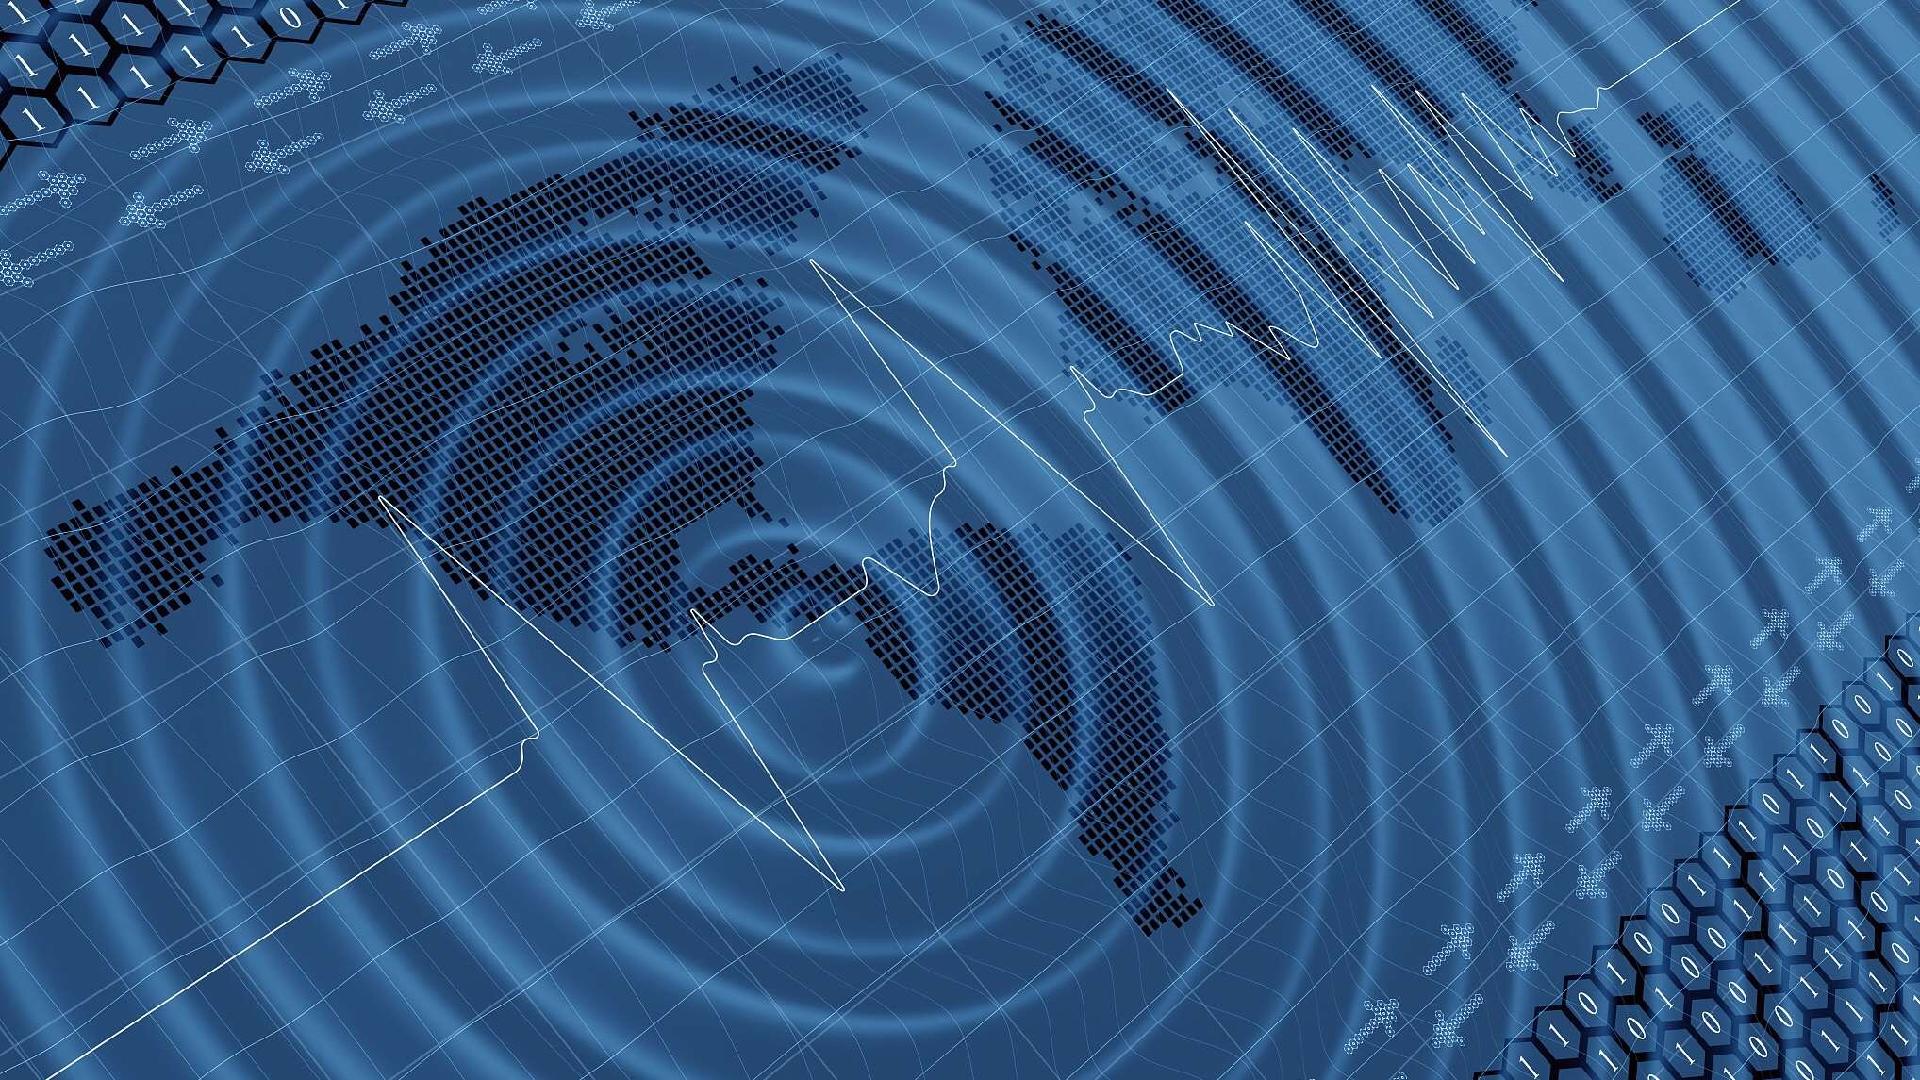 6.0-magnitude earthquake strikes off Peru coast – CGTN